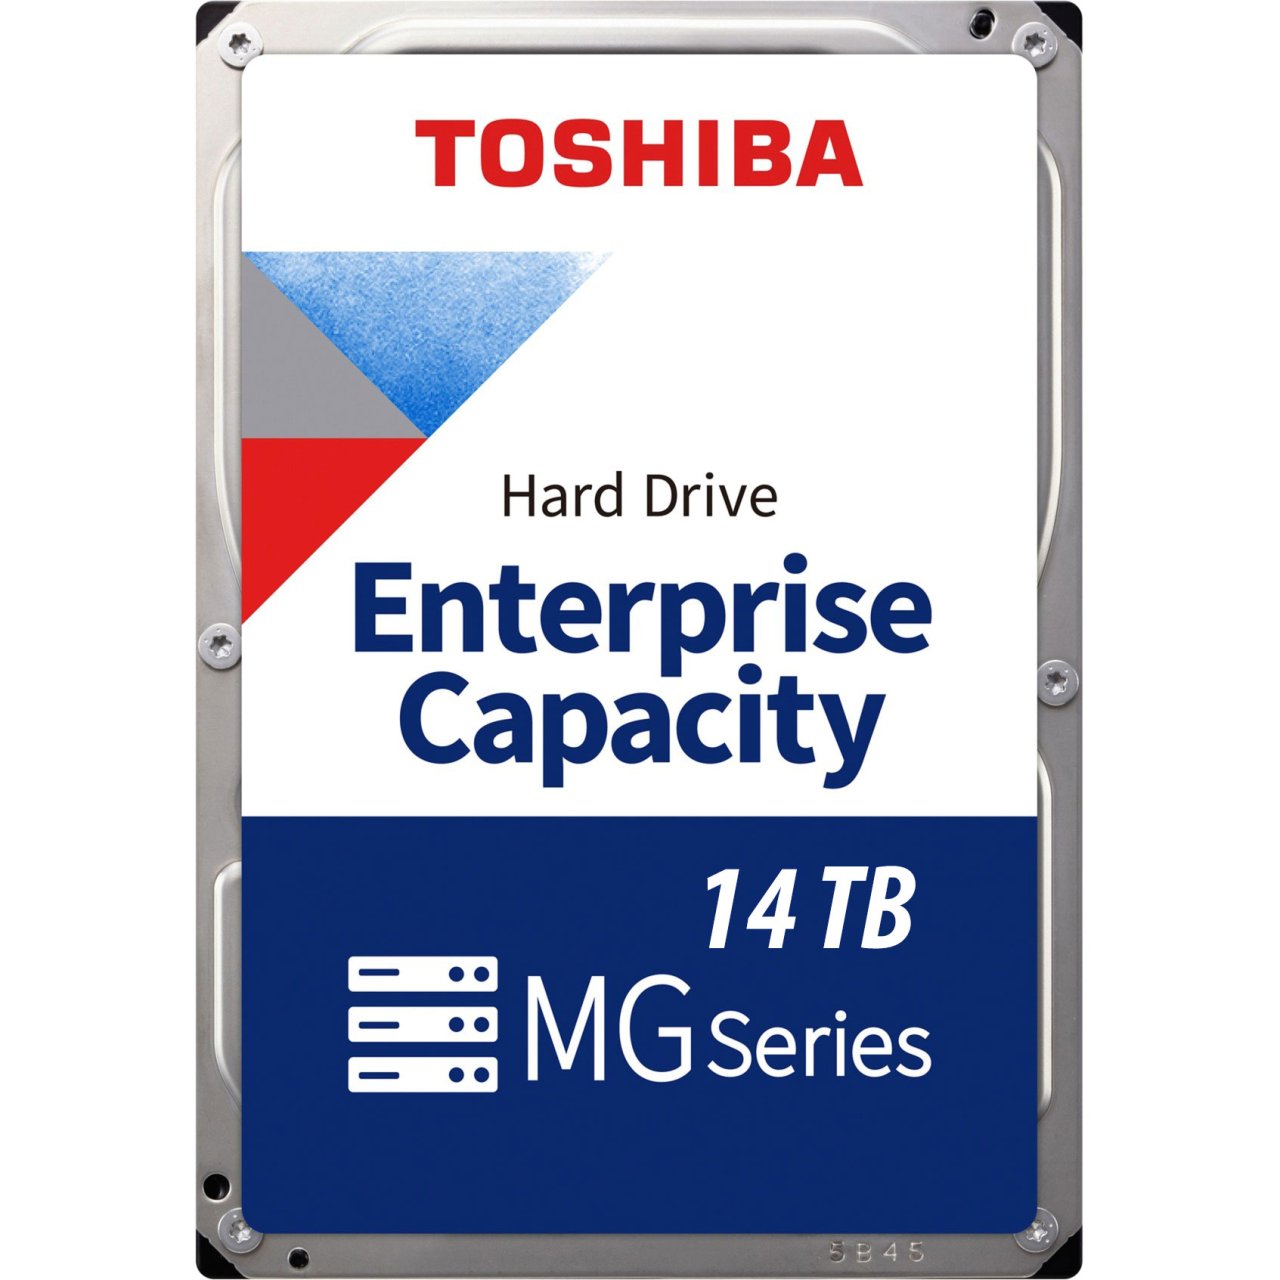 TOSHIBA Enterprise 14 TB SATA HDD 2 4x 7, 3,5", intern MG07ACA14TE